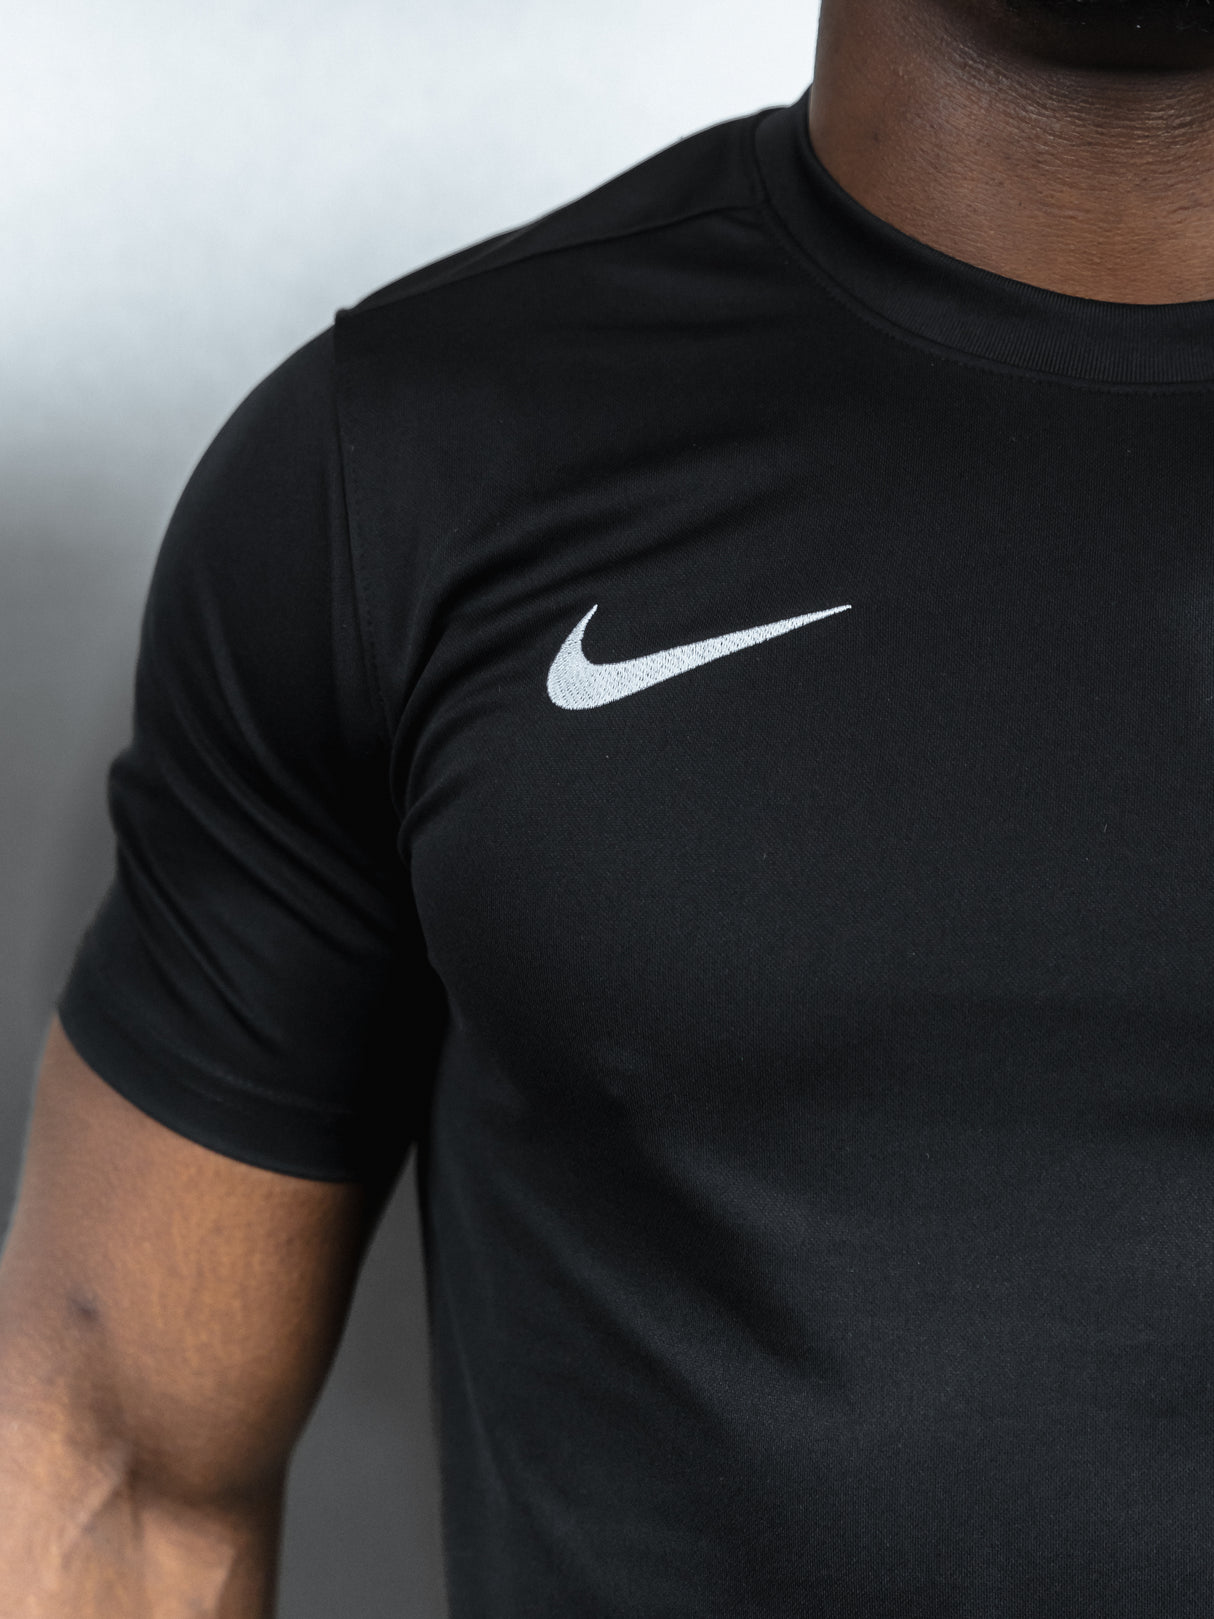 Nike - Dri Fit T Shirt - Black